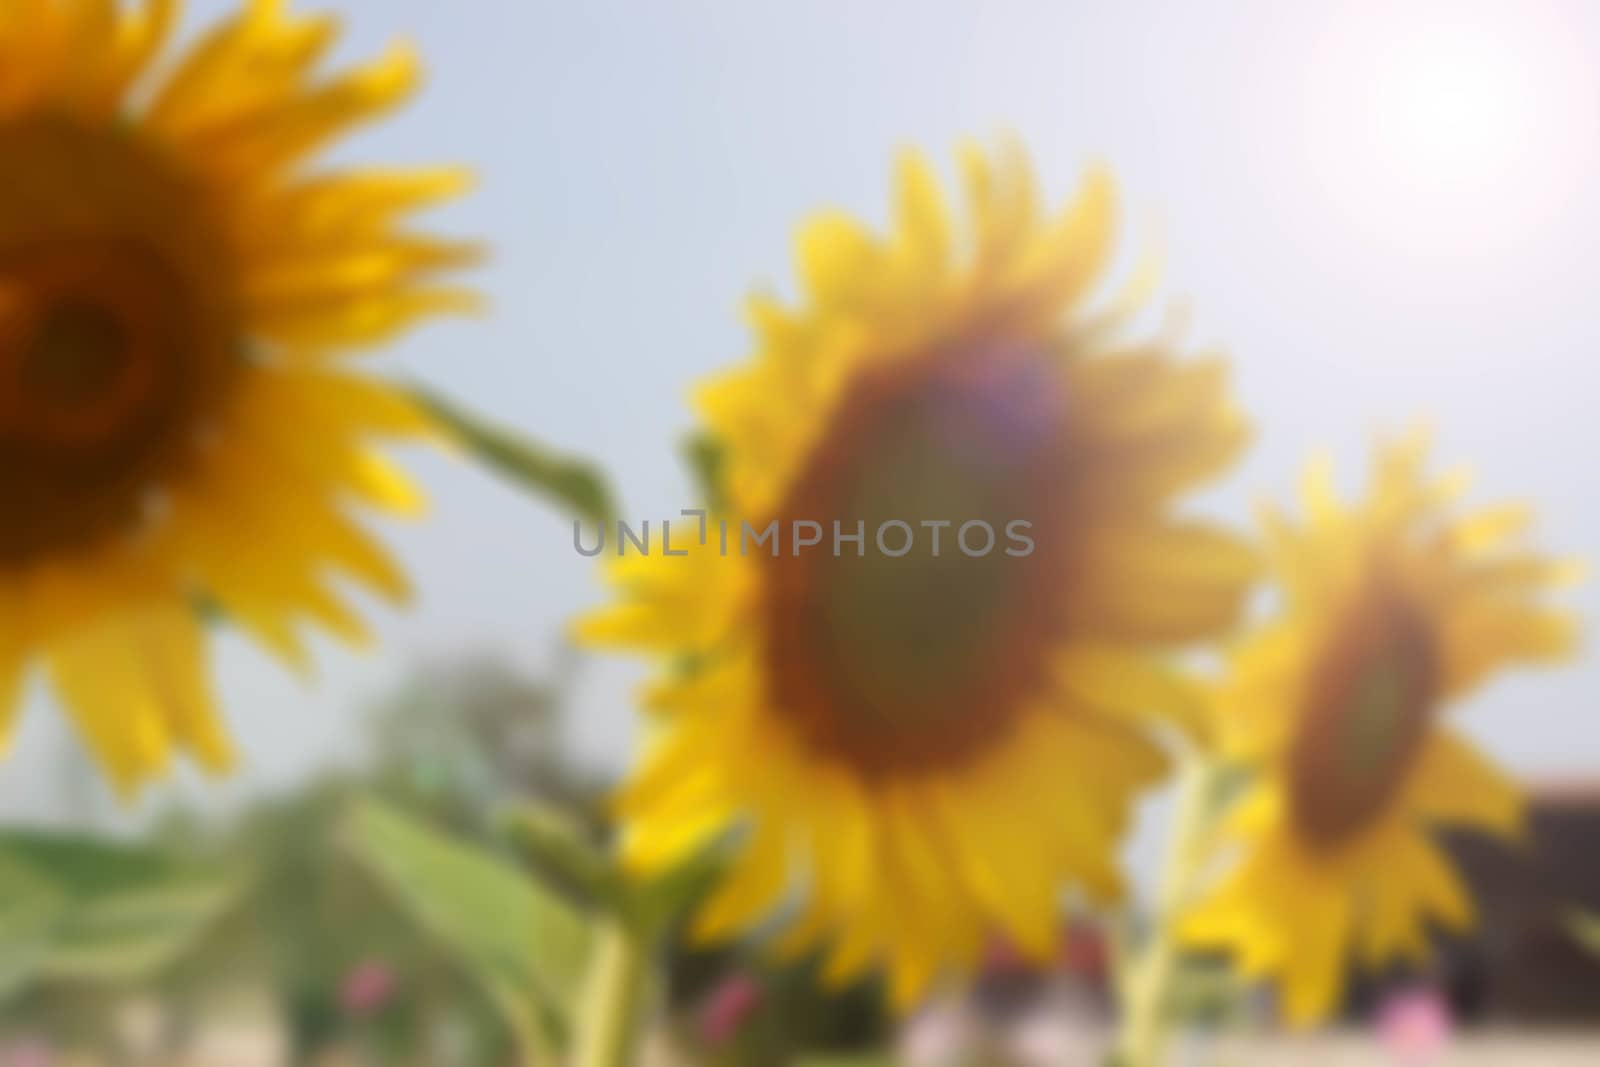 Sunflower and sunlight blur background